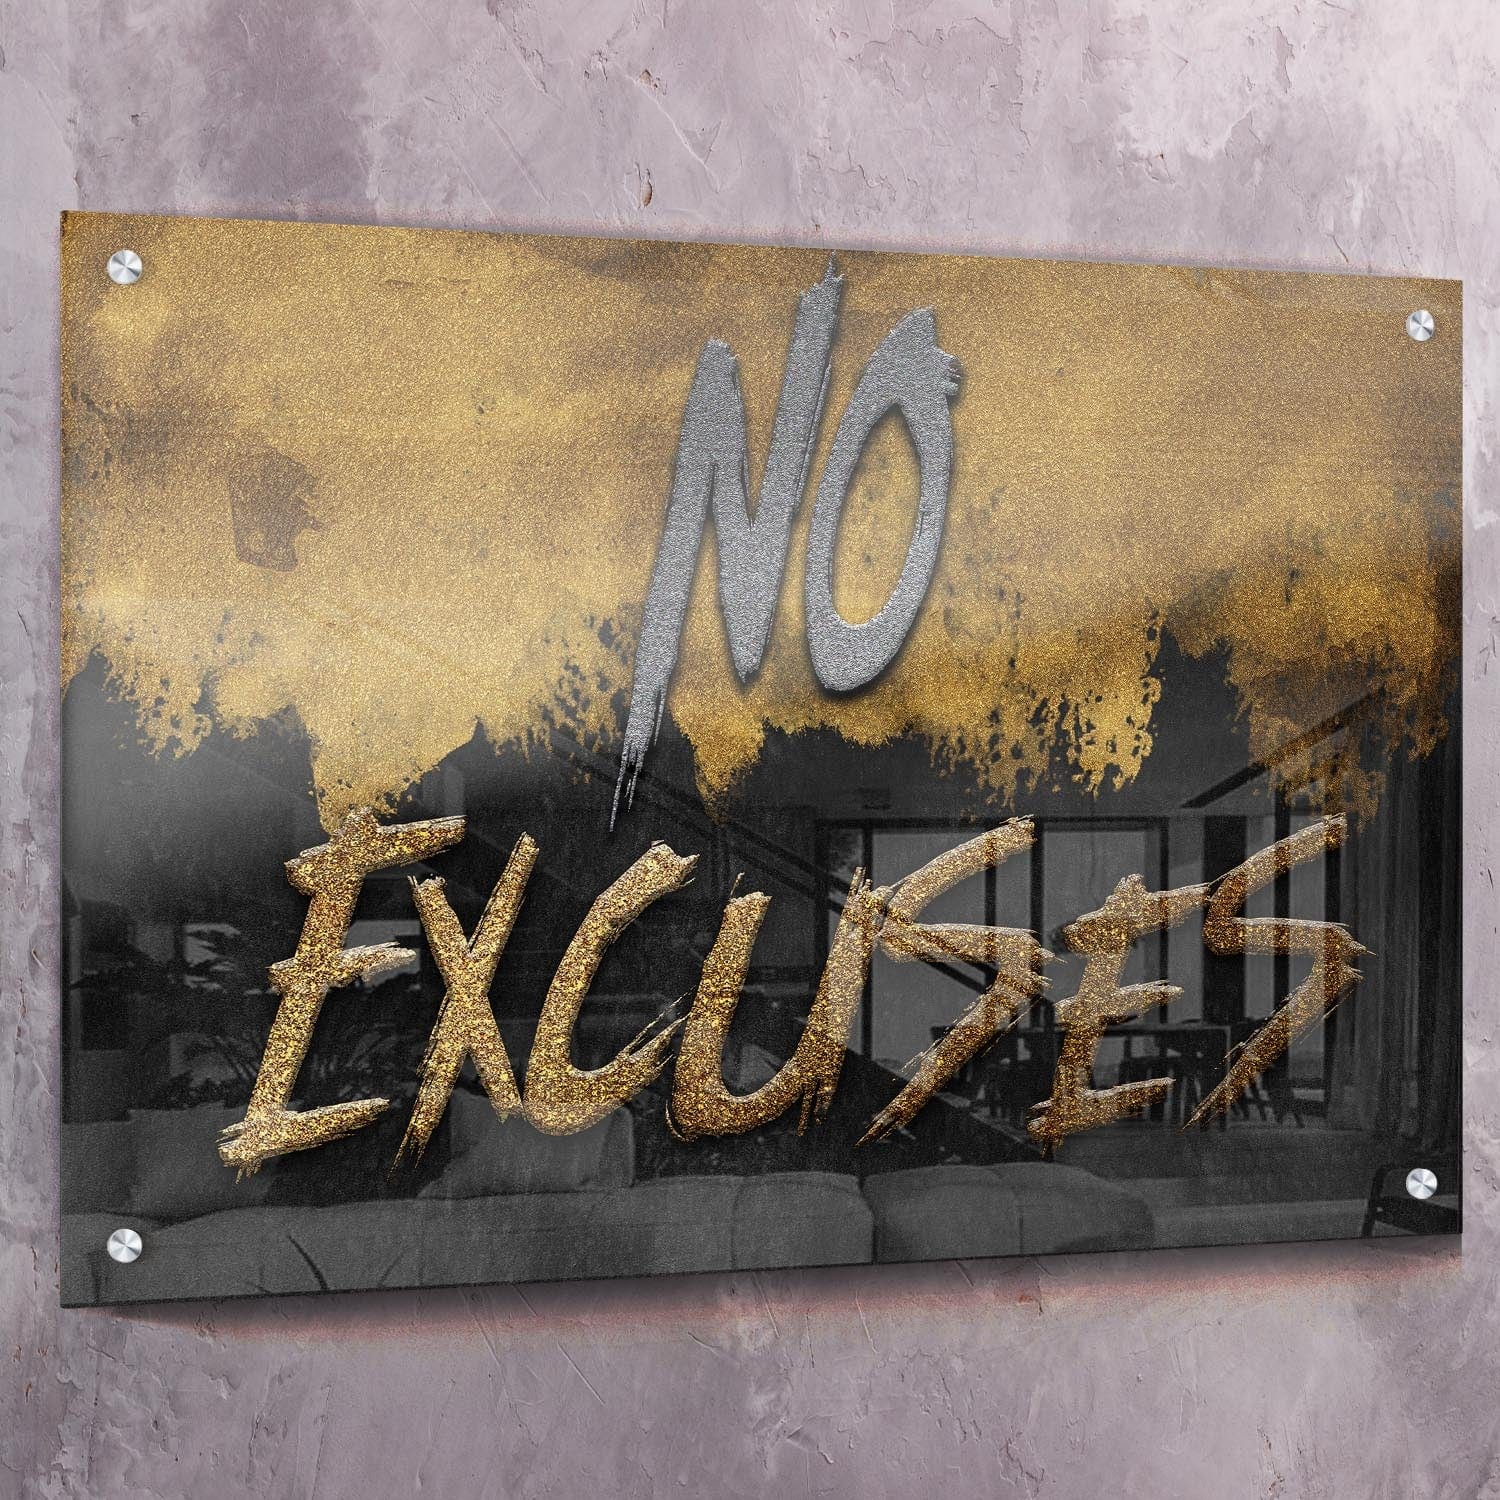 No Excuses Wall Art | Inspirational Wall Art Motivational Wall Art Quotes Office Art | ImpaktMaker Exclusive Canvas Art Landscape